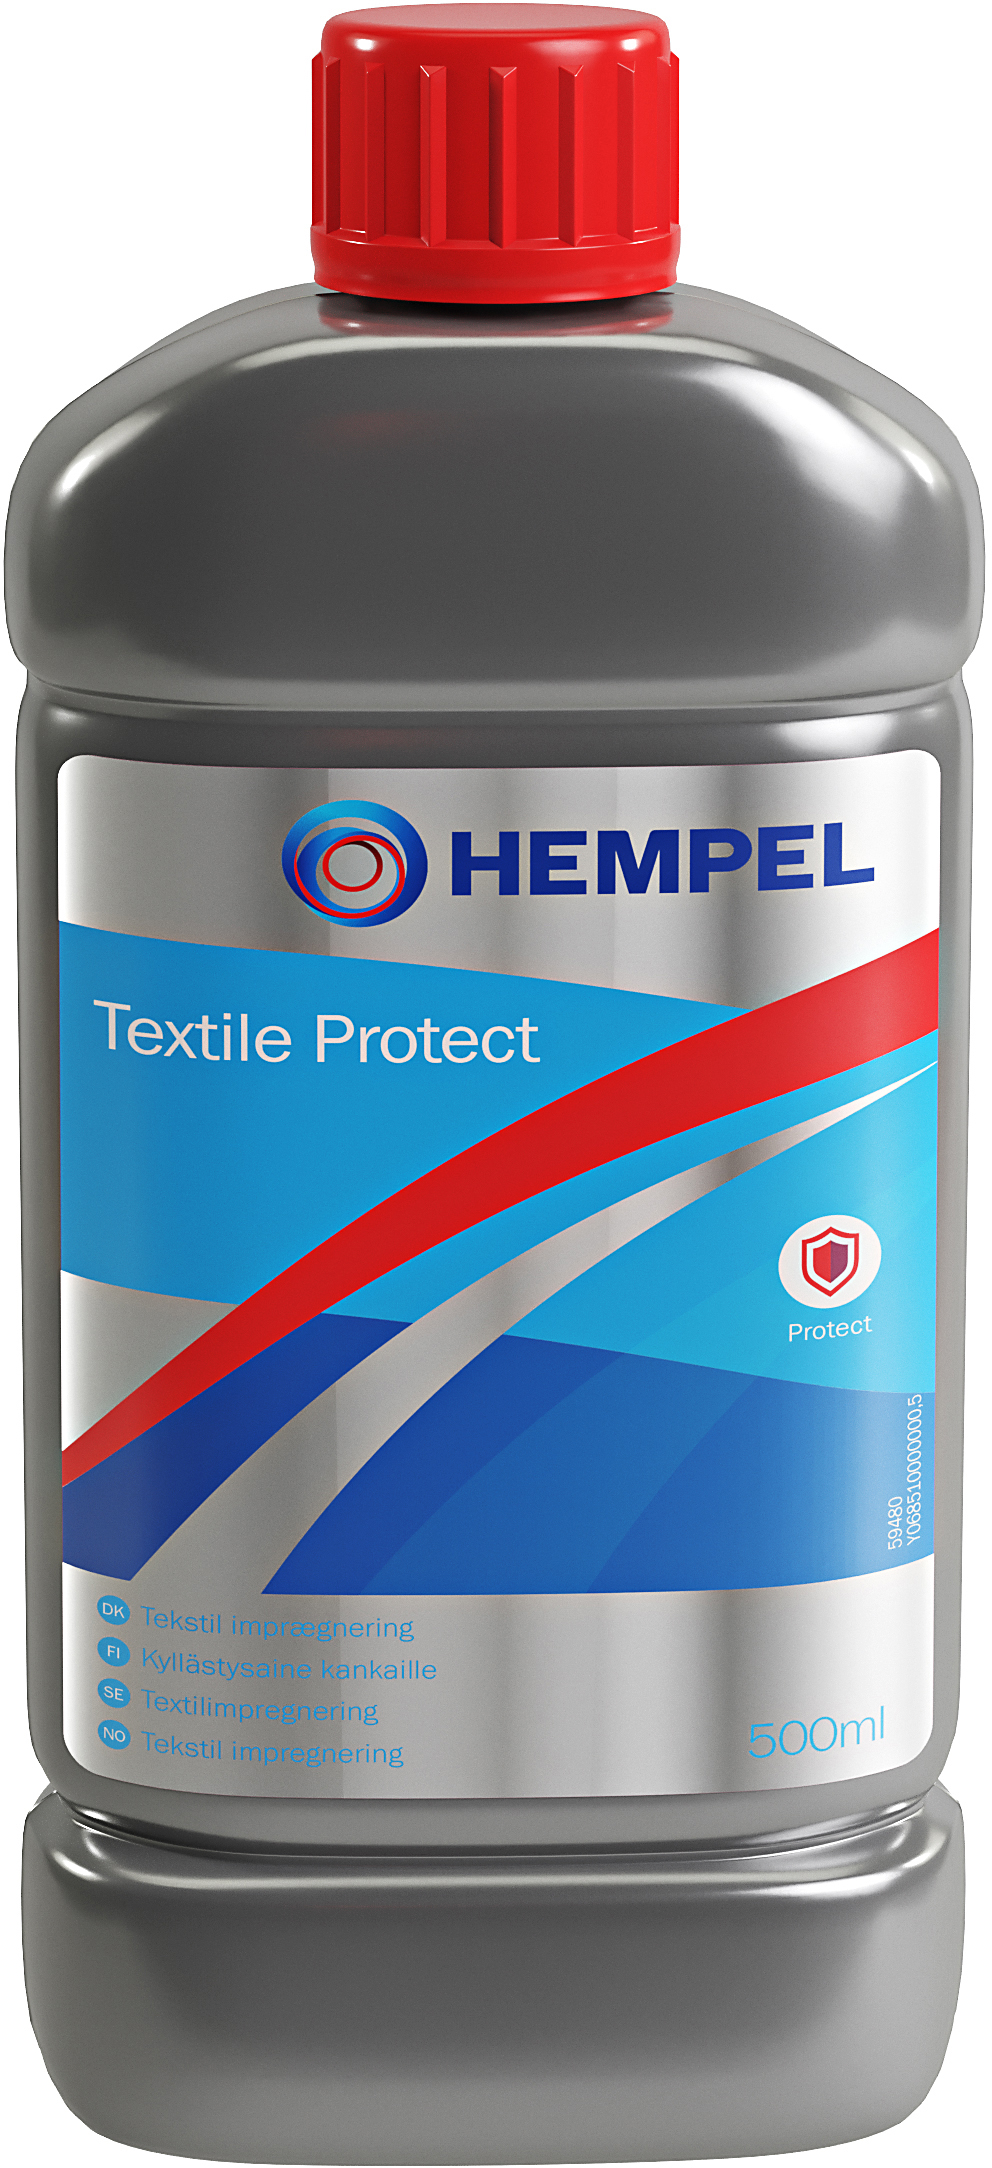 Hempel Textile Protect 500 ml